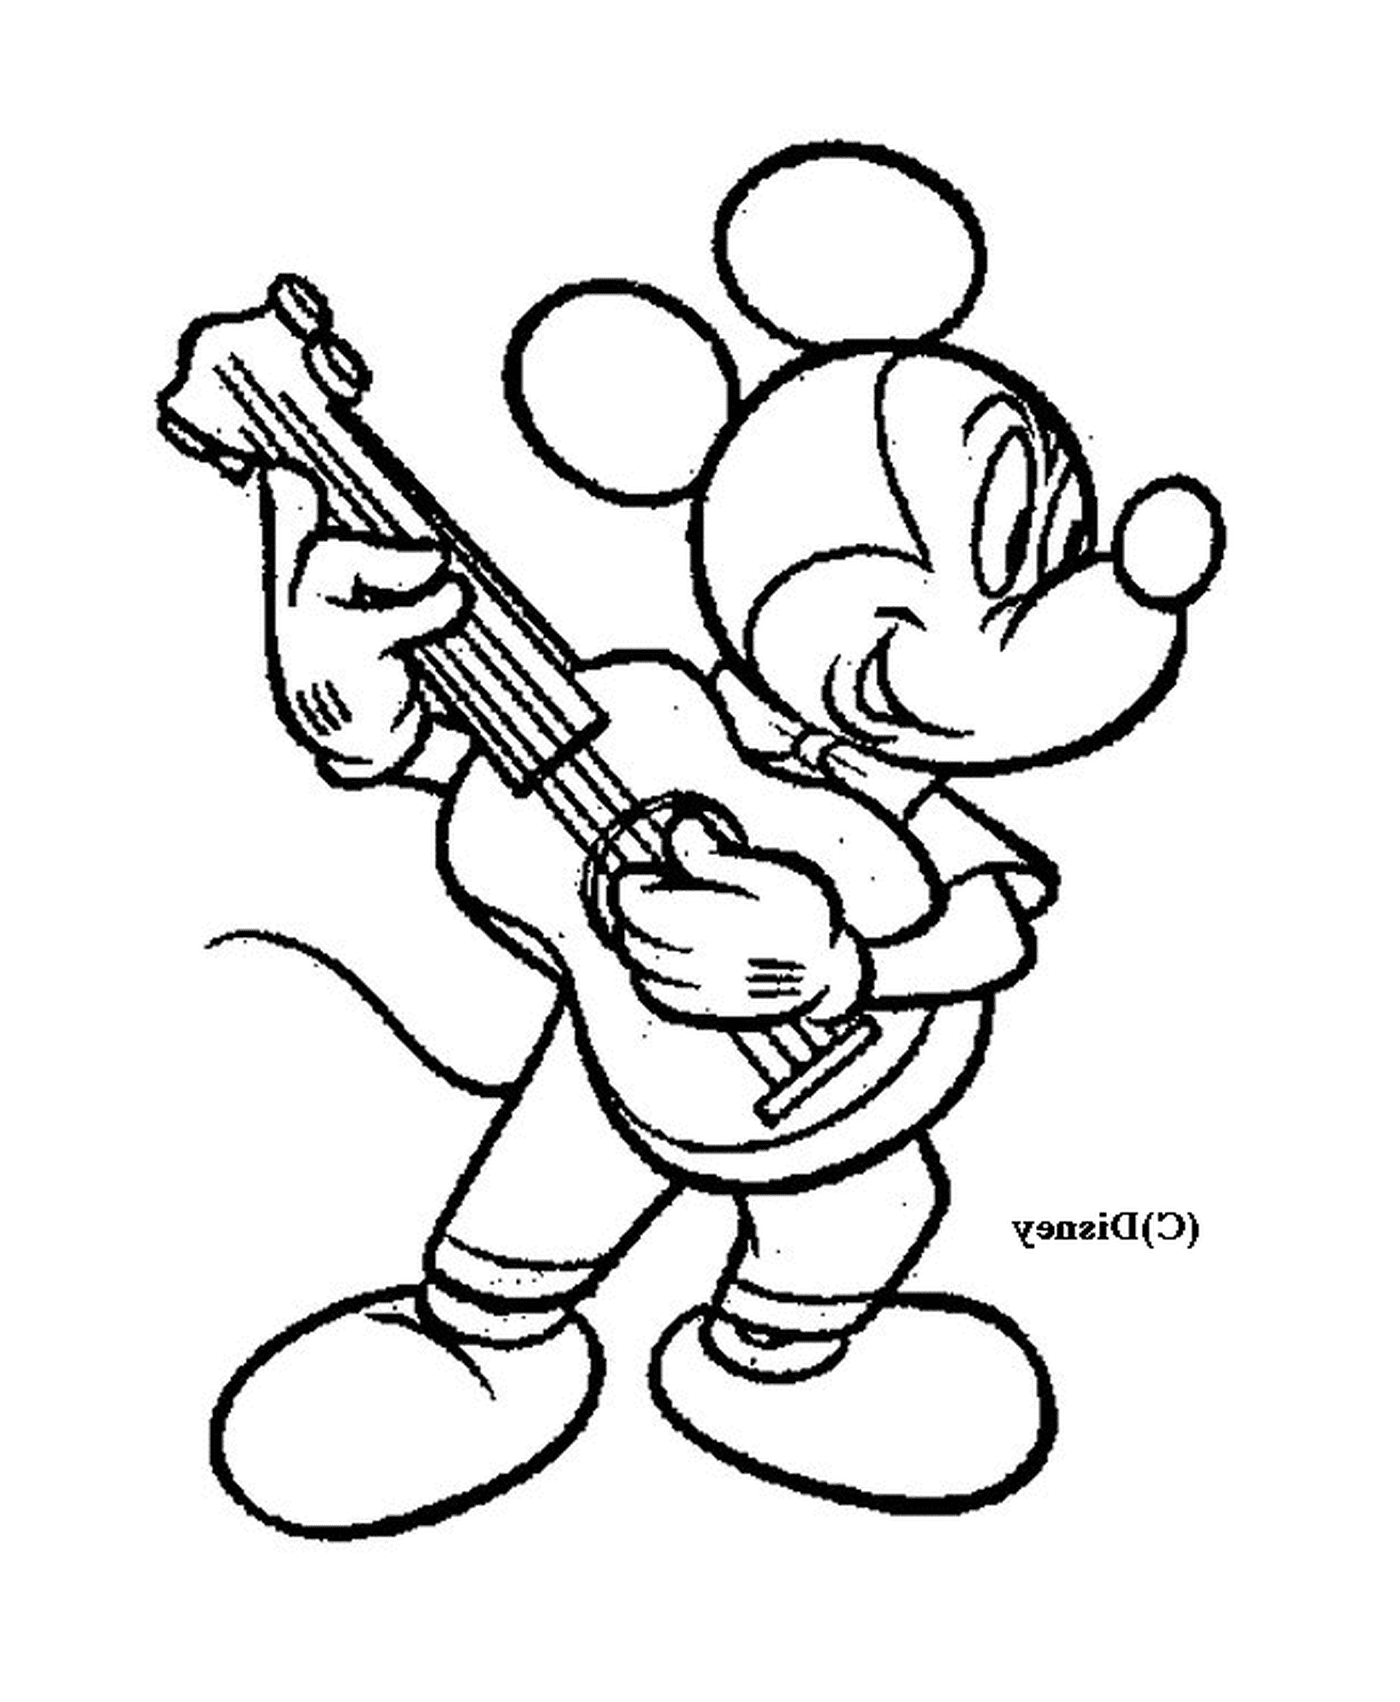   Mickey joue de la guitare : Mickey Mouse jouant de la guitare 